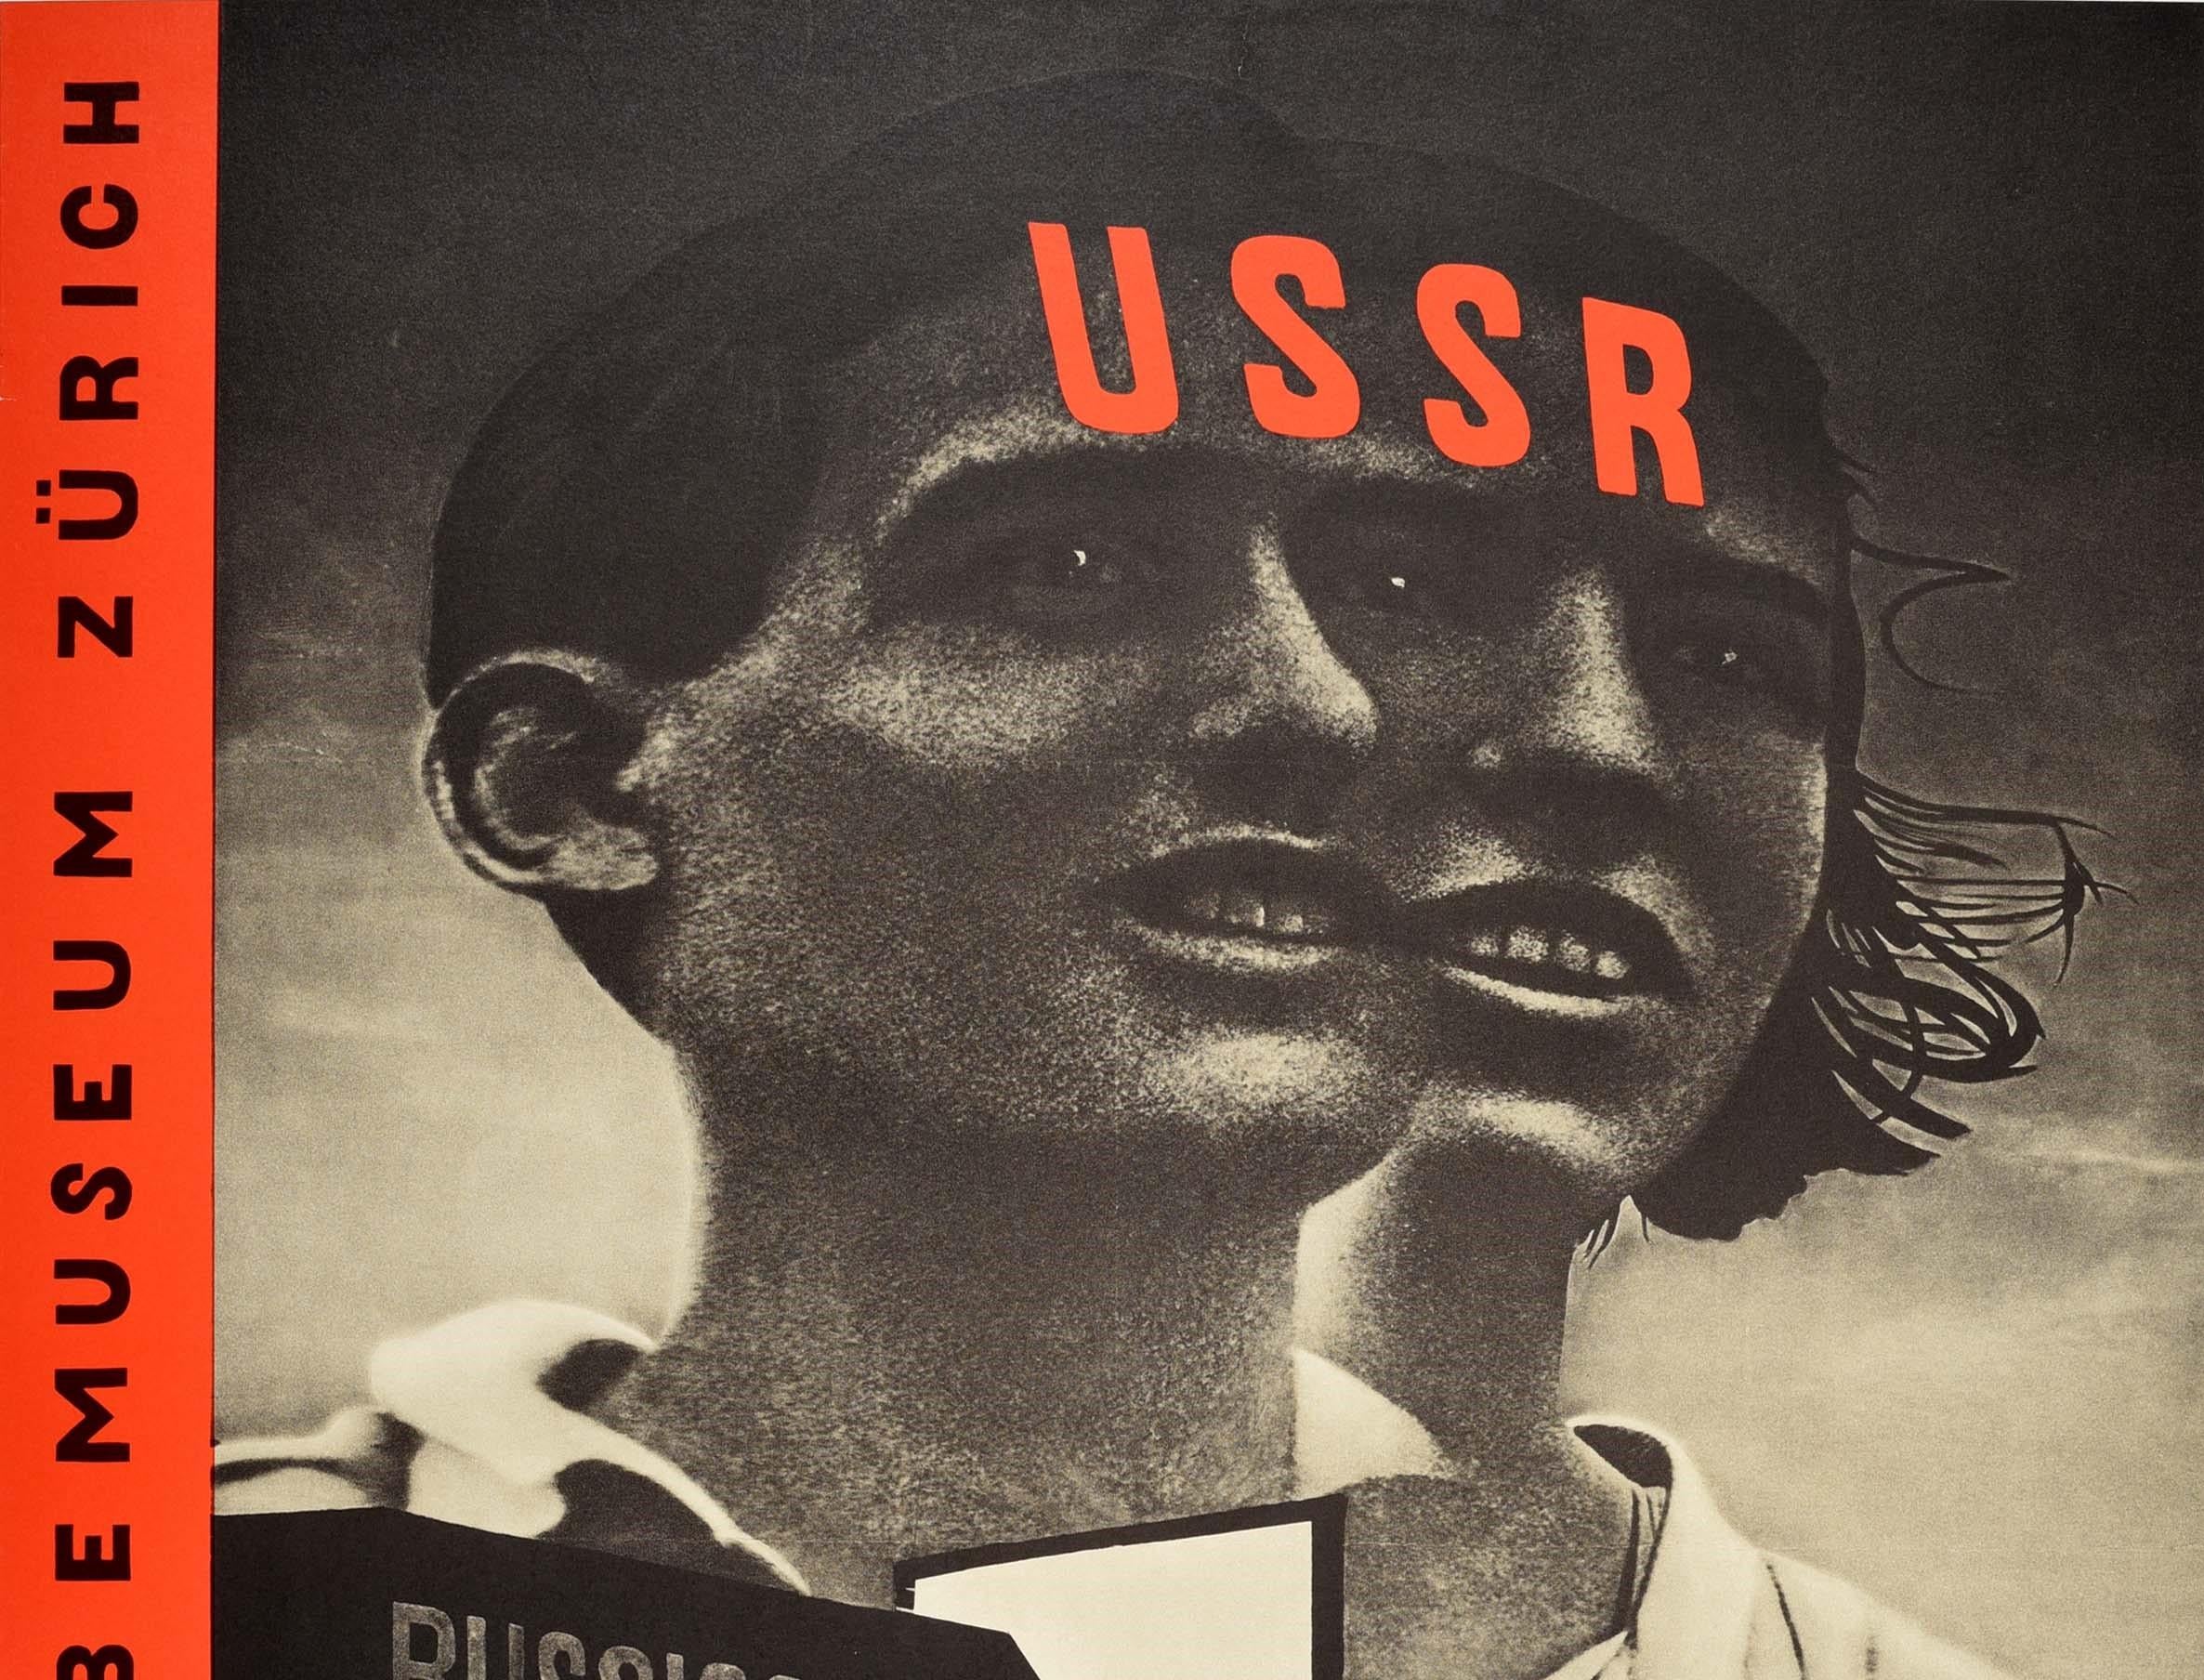 russian poster design